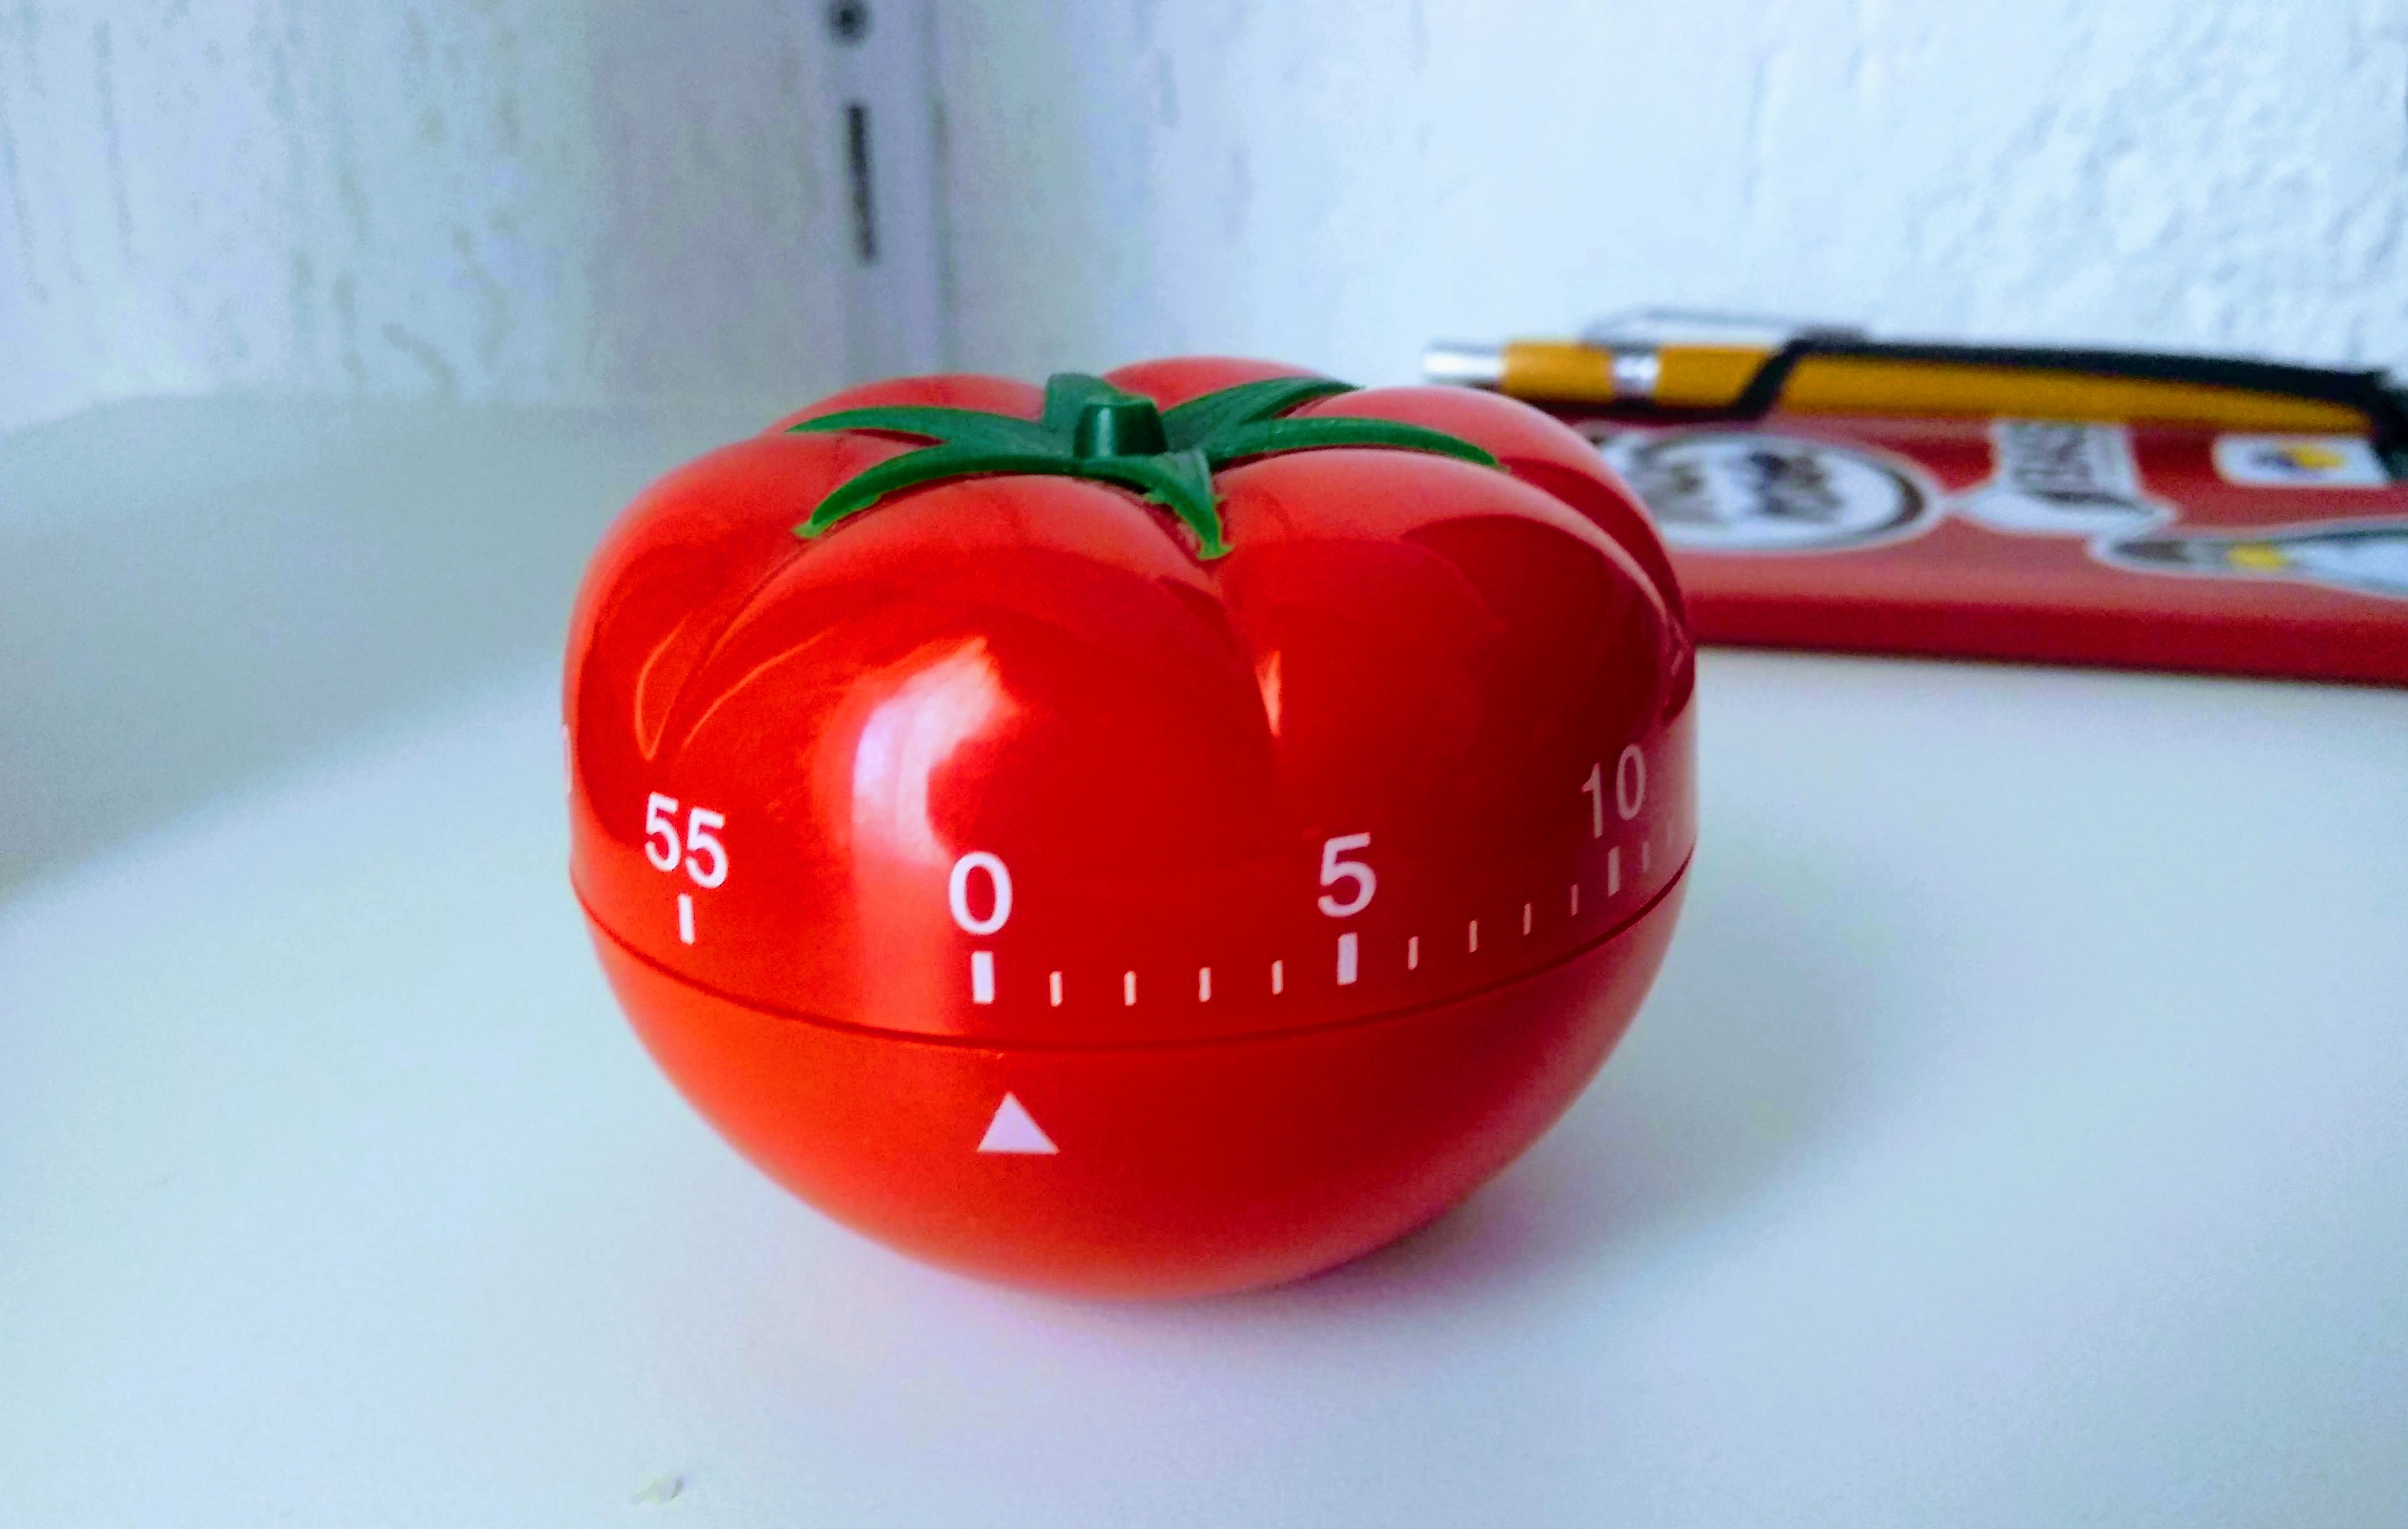 pomodoro study technique timer